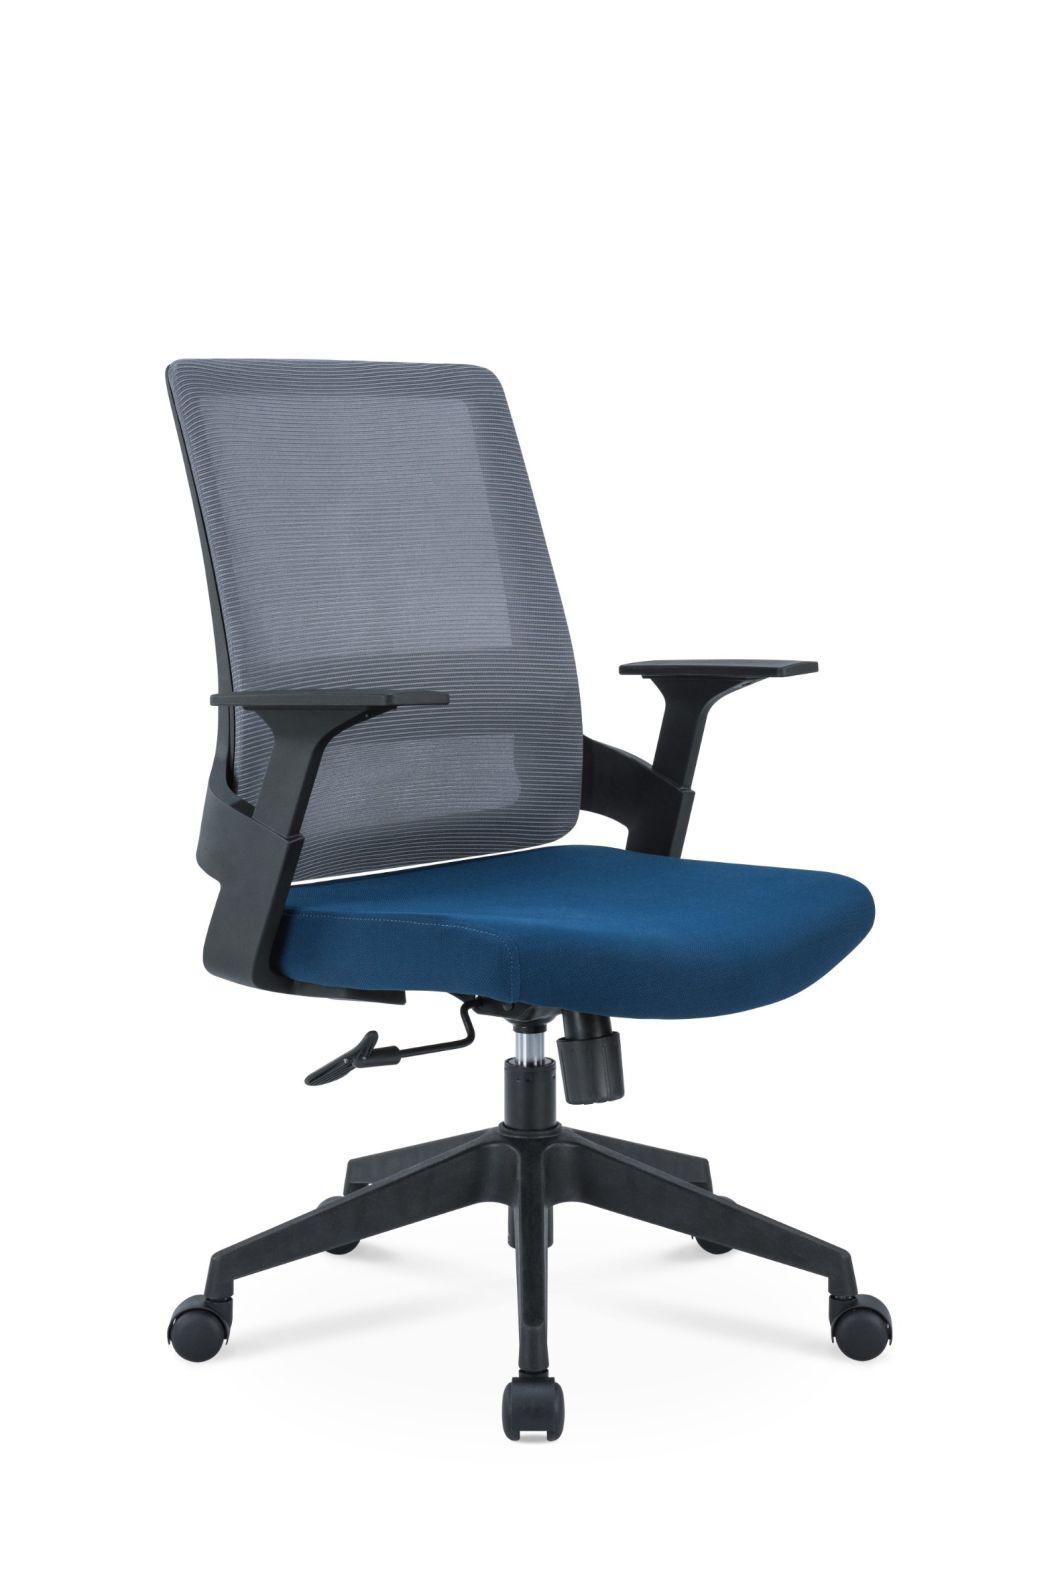 Good Price European Standard En1335 BIFMA Medium Back Staff Modern Office Swivel Mesh Chair